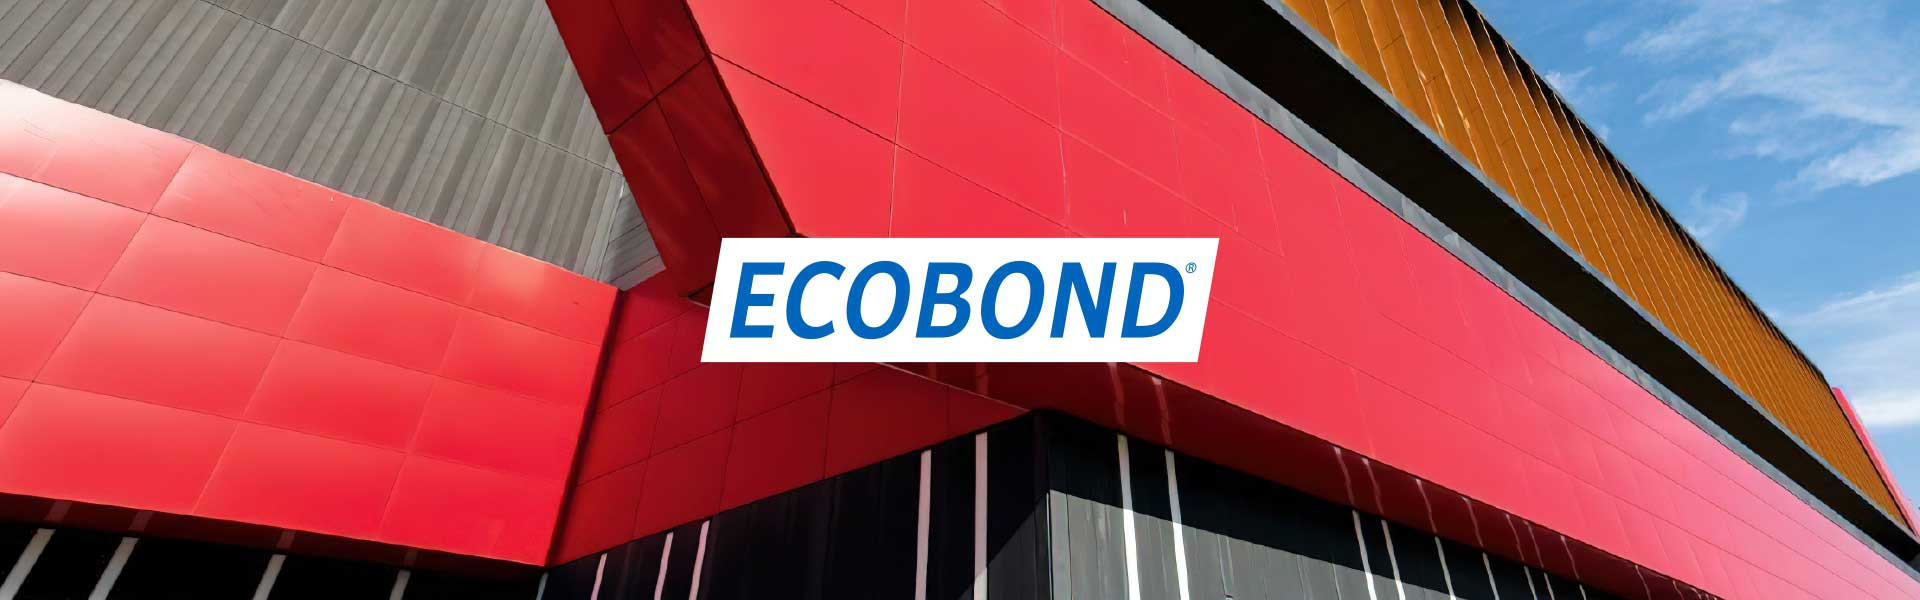 Композитная панель ECOBOND HIGH GLOSS 3 мм красного цвета – 19,17$ за м.кв